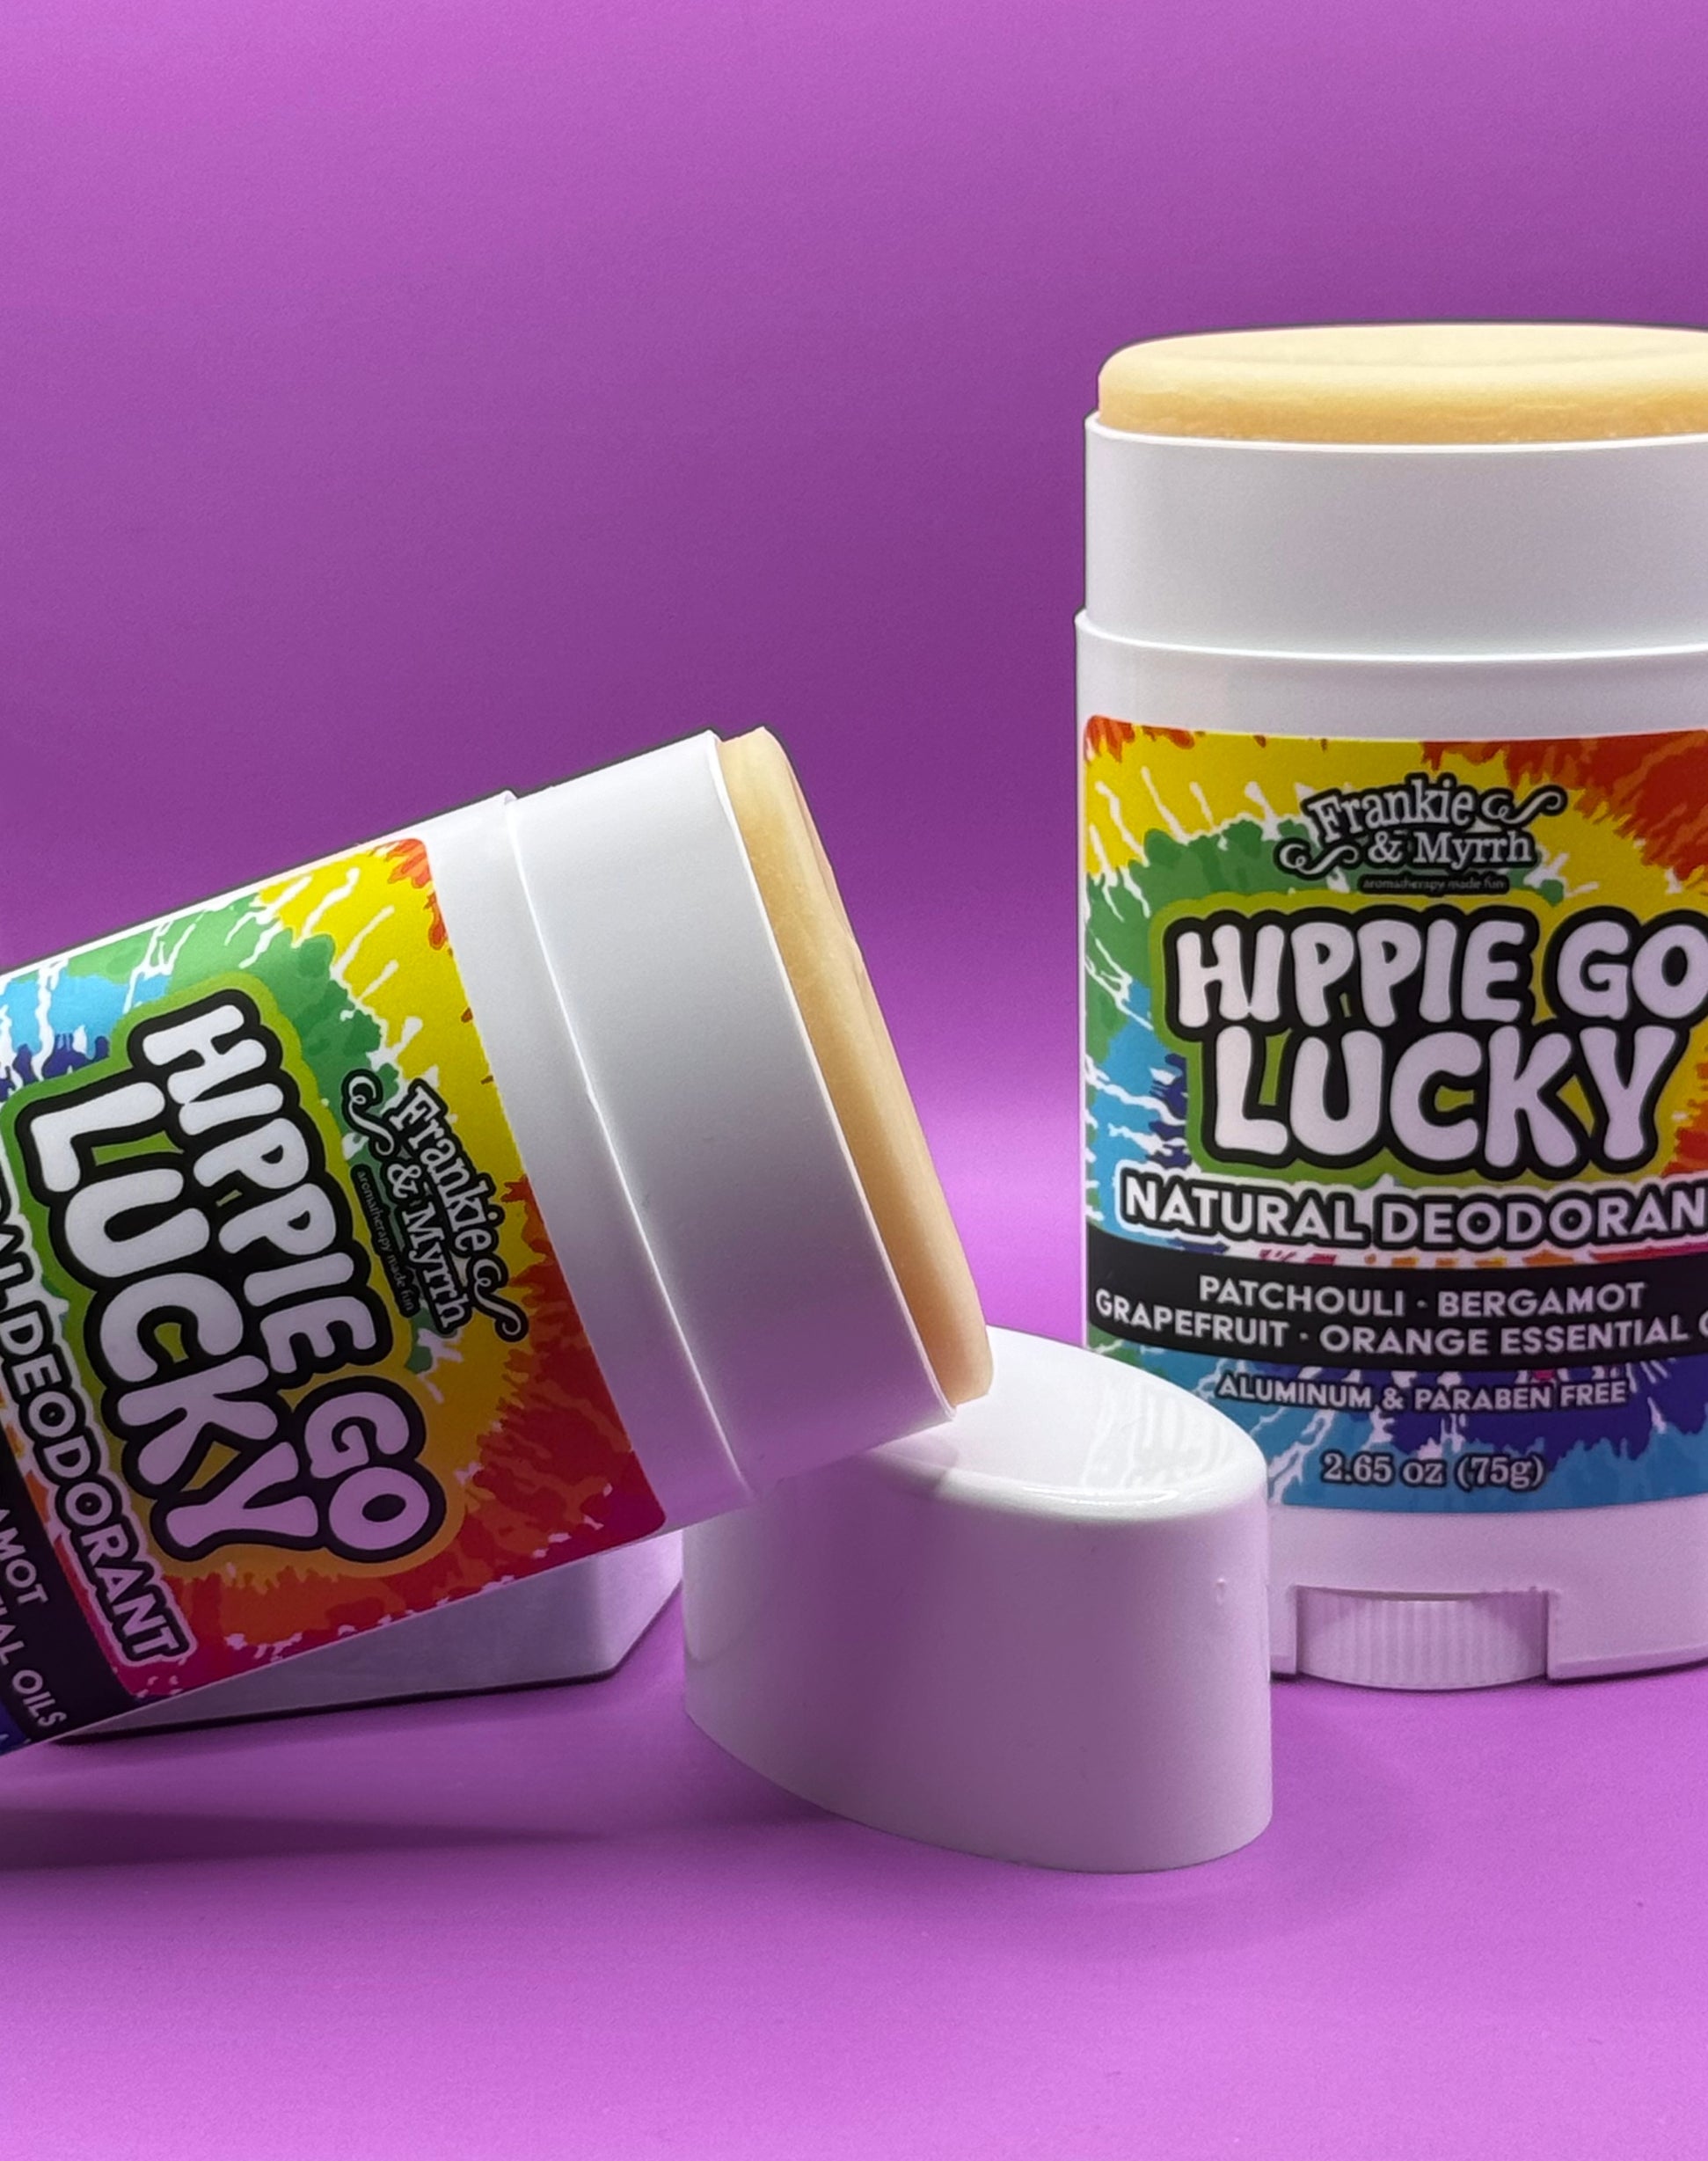 Hippie Go Lucky 2 Pack | Natural Deodorant | Patchouli, Bergamot, Sweet Orange, Grapefruit